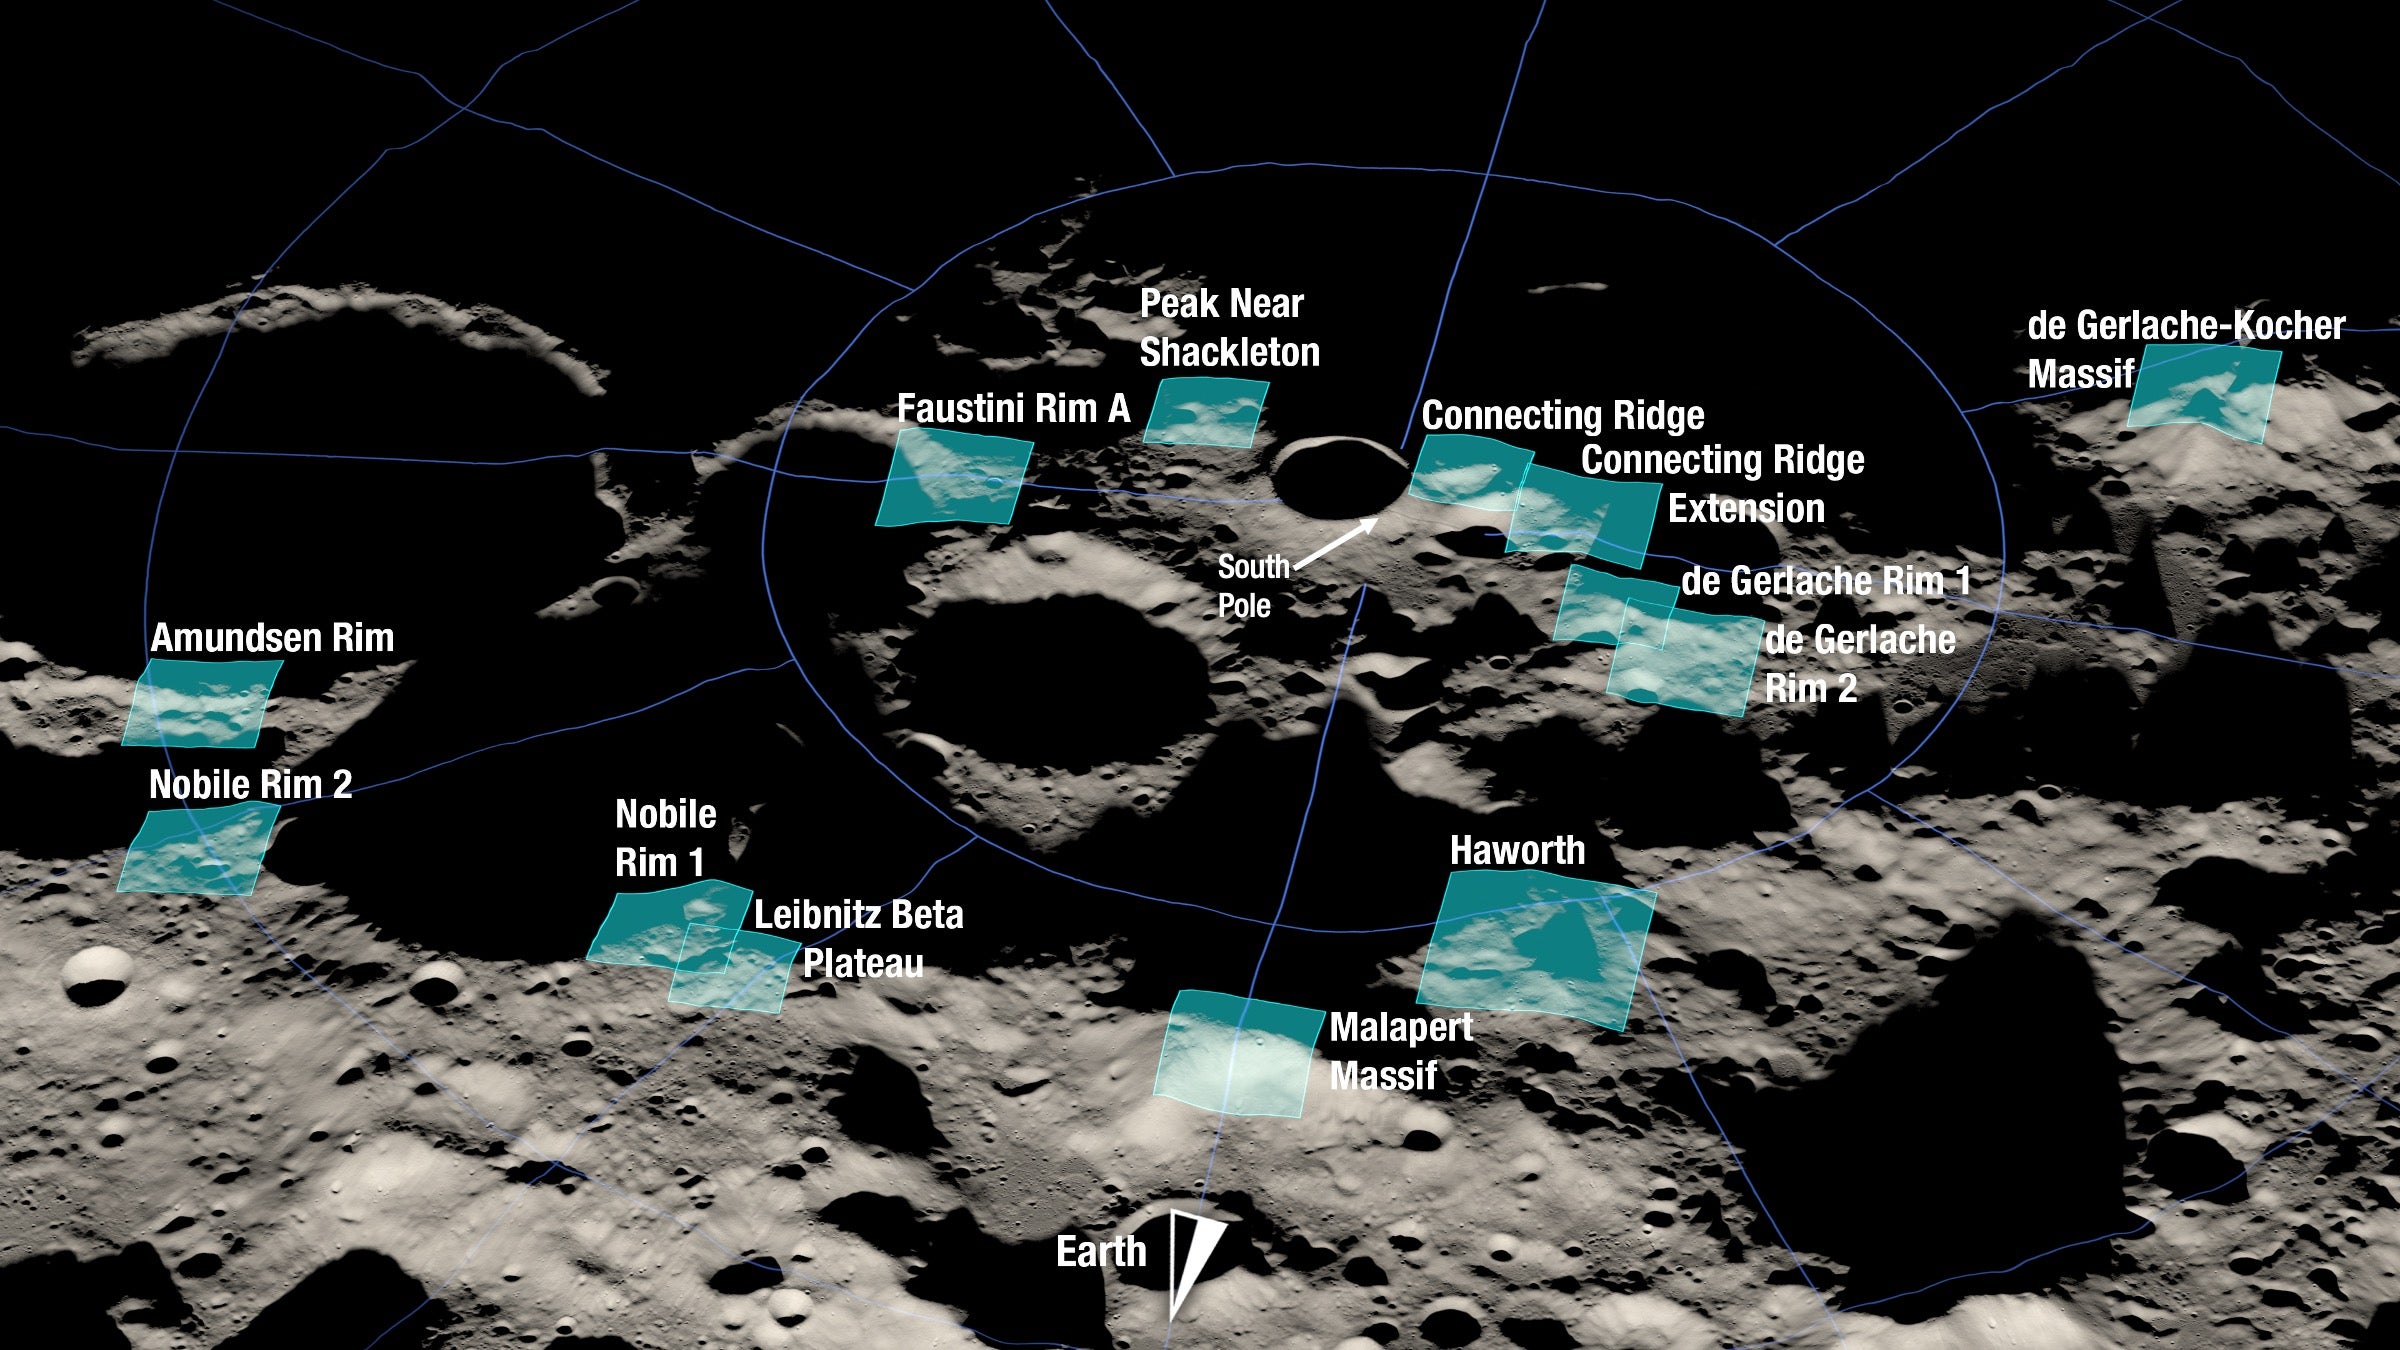 Proposed Artemis 3 landing sites, including Malapert massif. (Image: NASA)